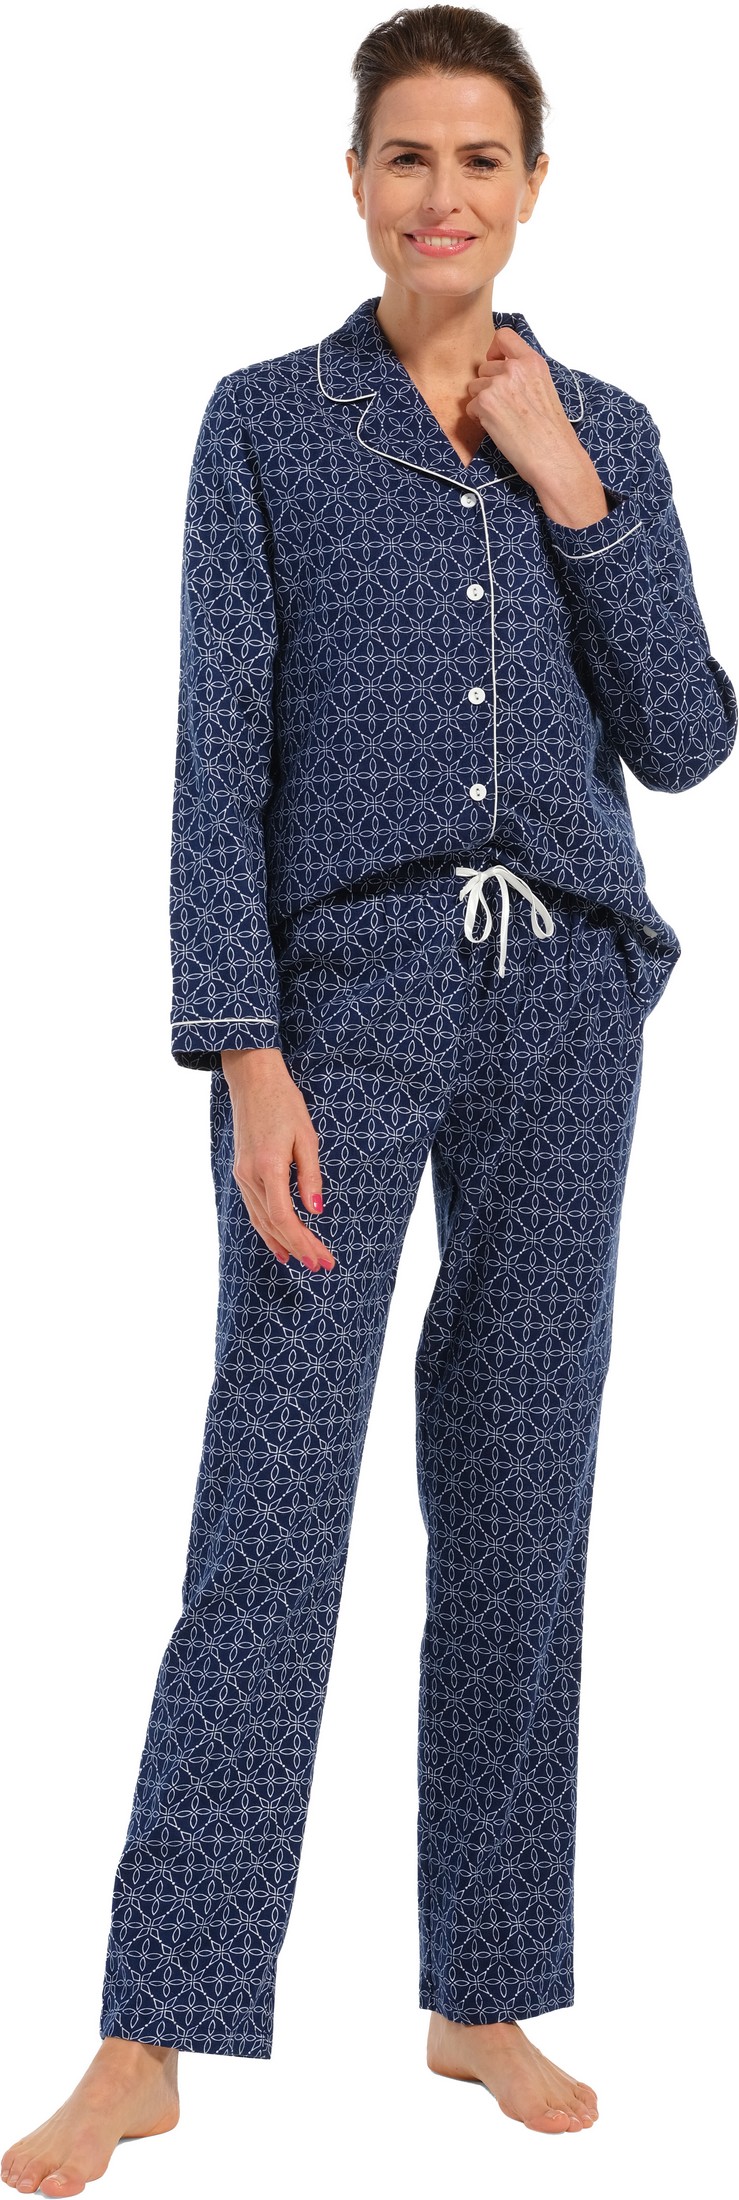 Pastunette dames pyjama flanel 20232-120-6 - Blauw - 48